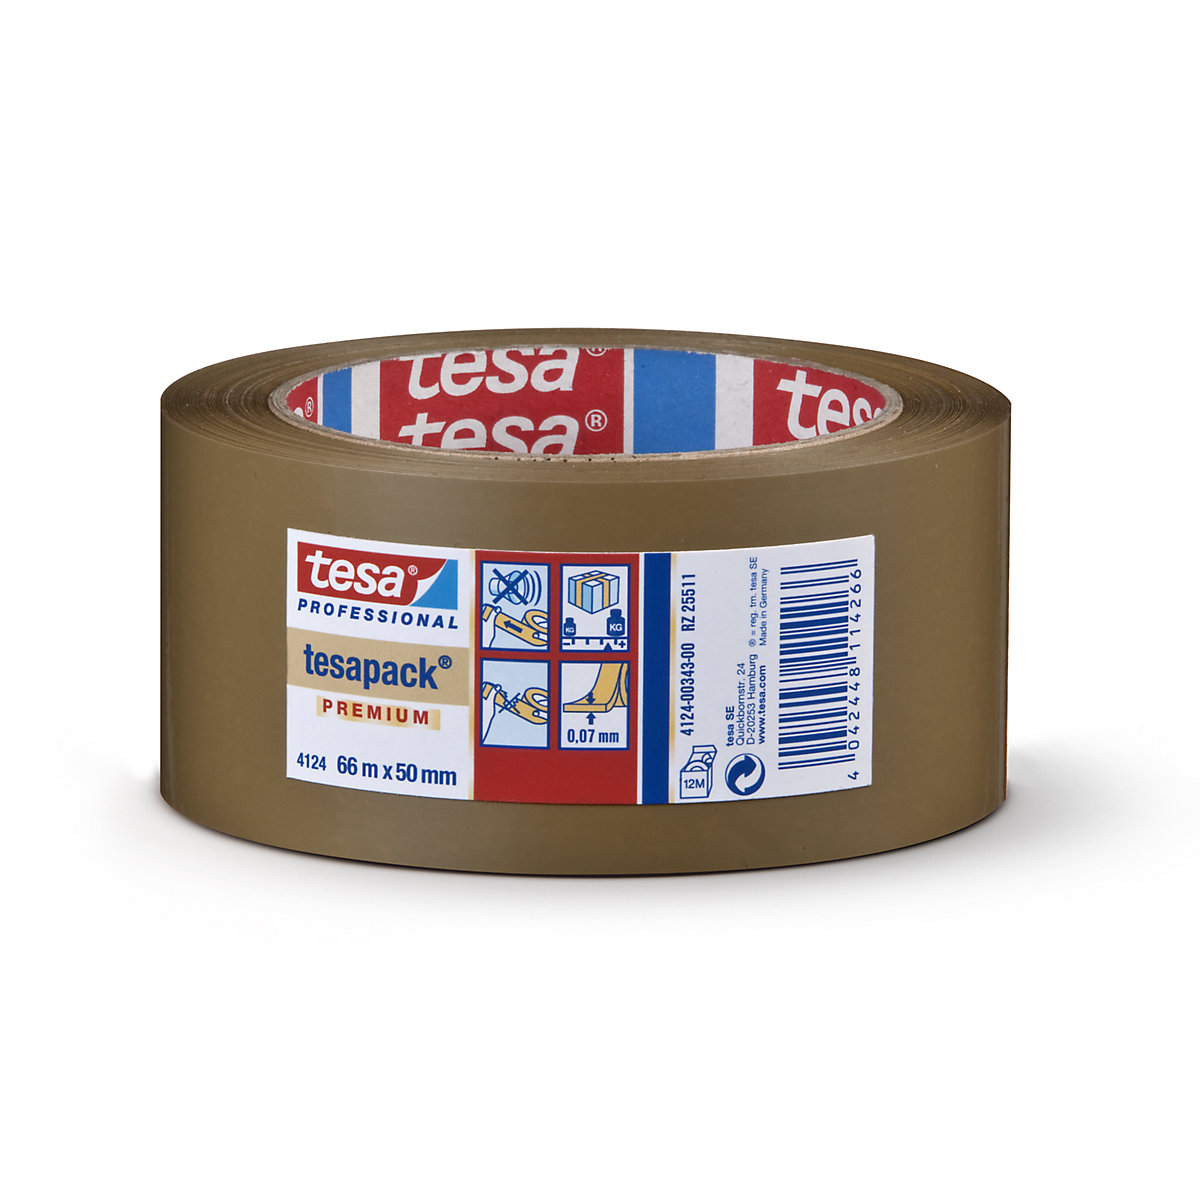 PVC packing tape – tesa, tesapack® 4124 premium, pack of 6 rolls, brown, tape width 50 mm-2